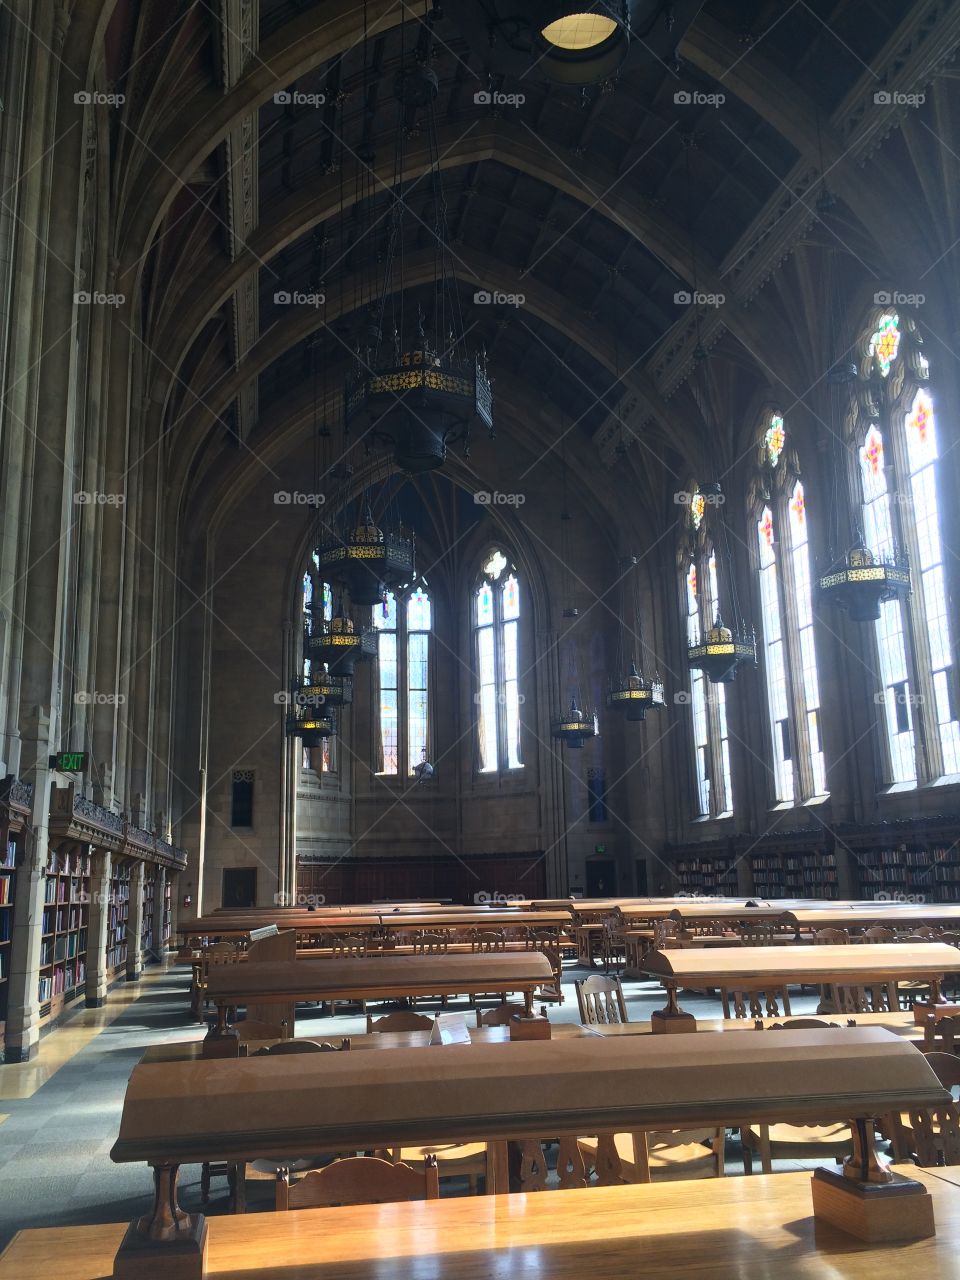 University of Washington "Harry Potter" library 